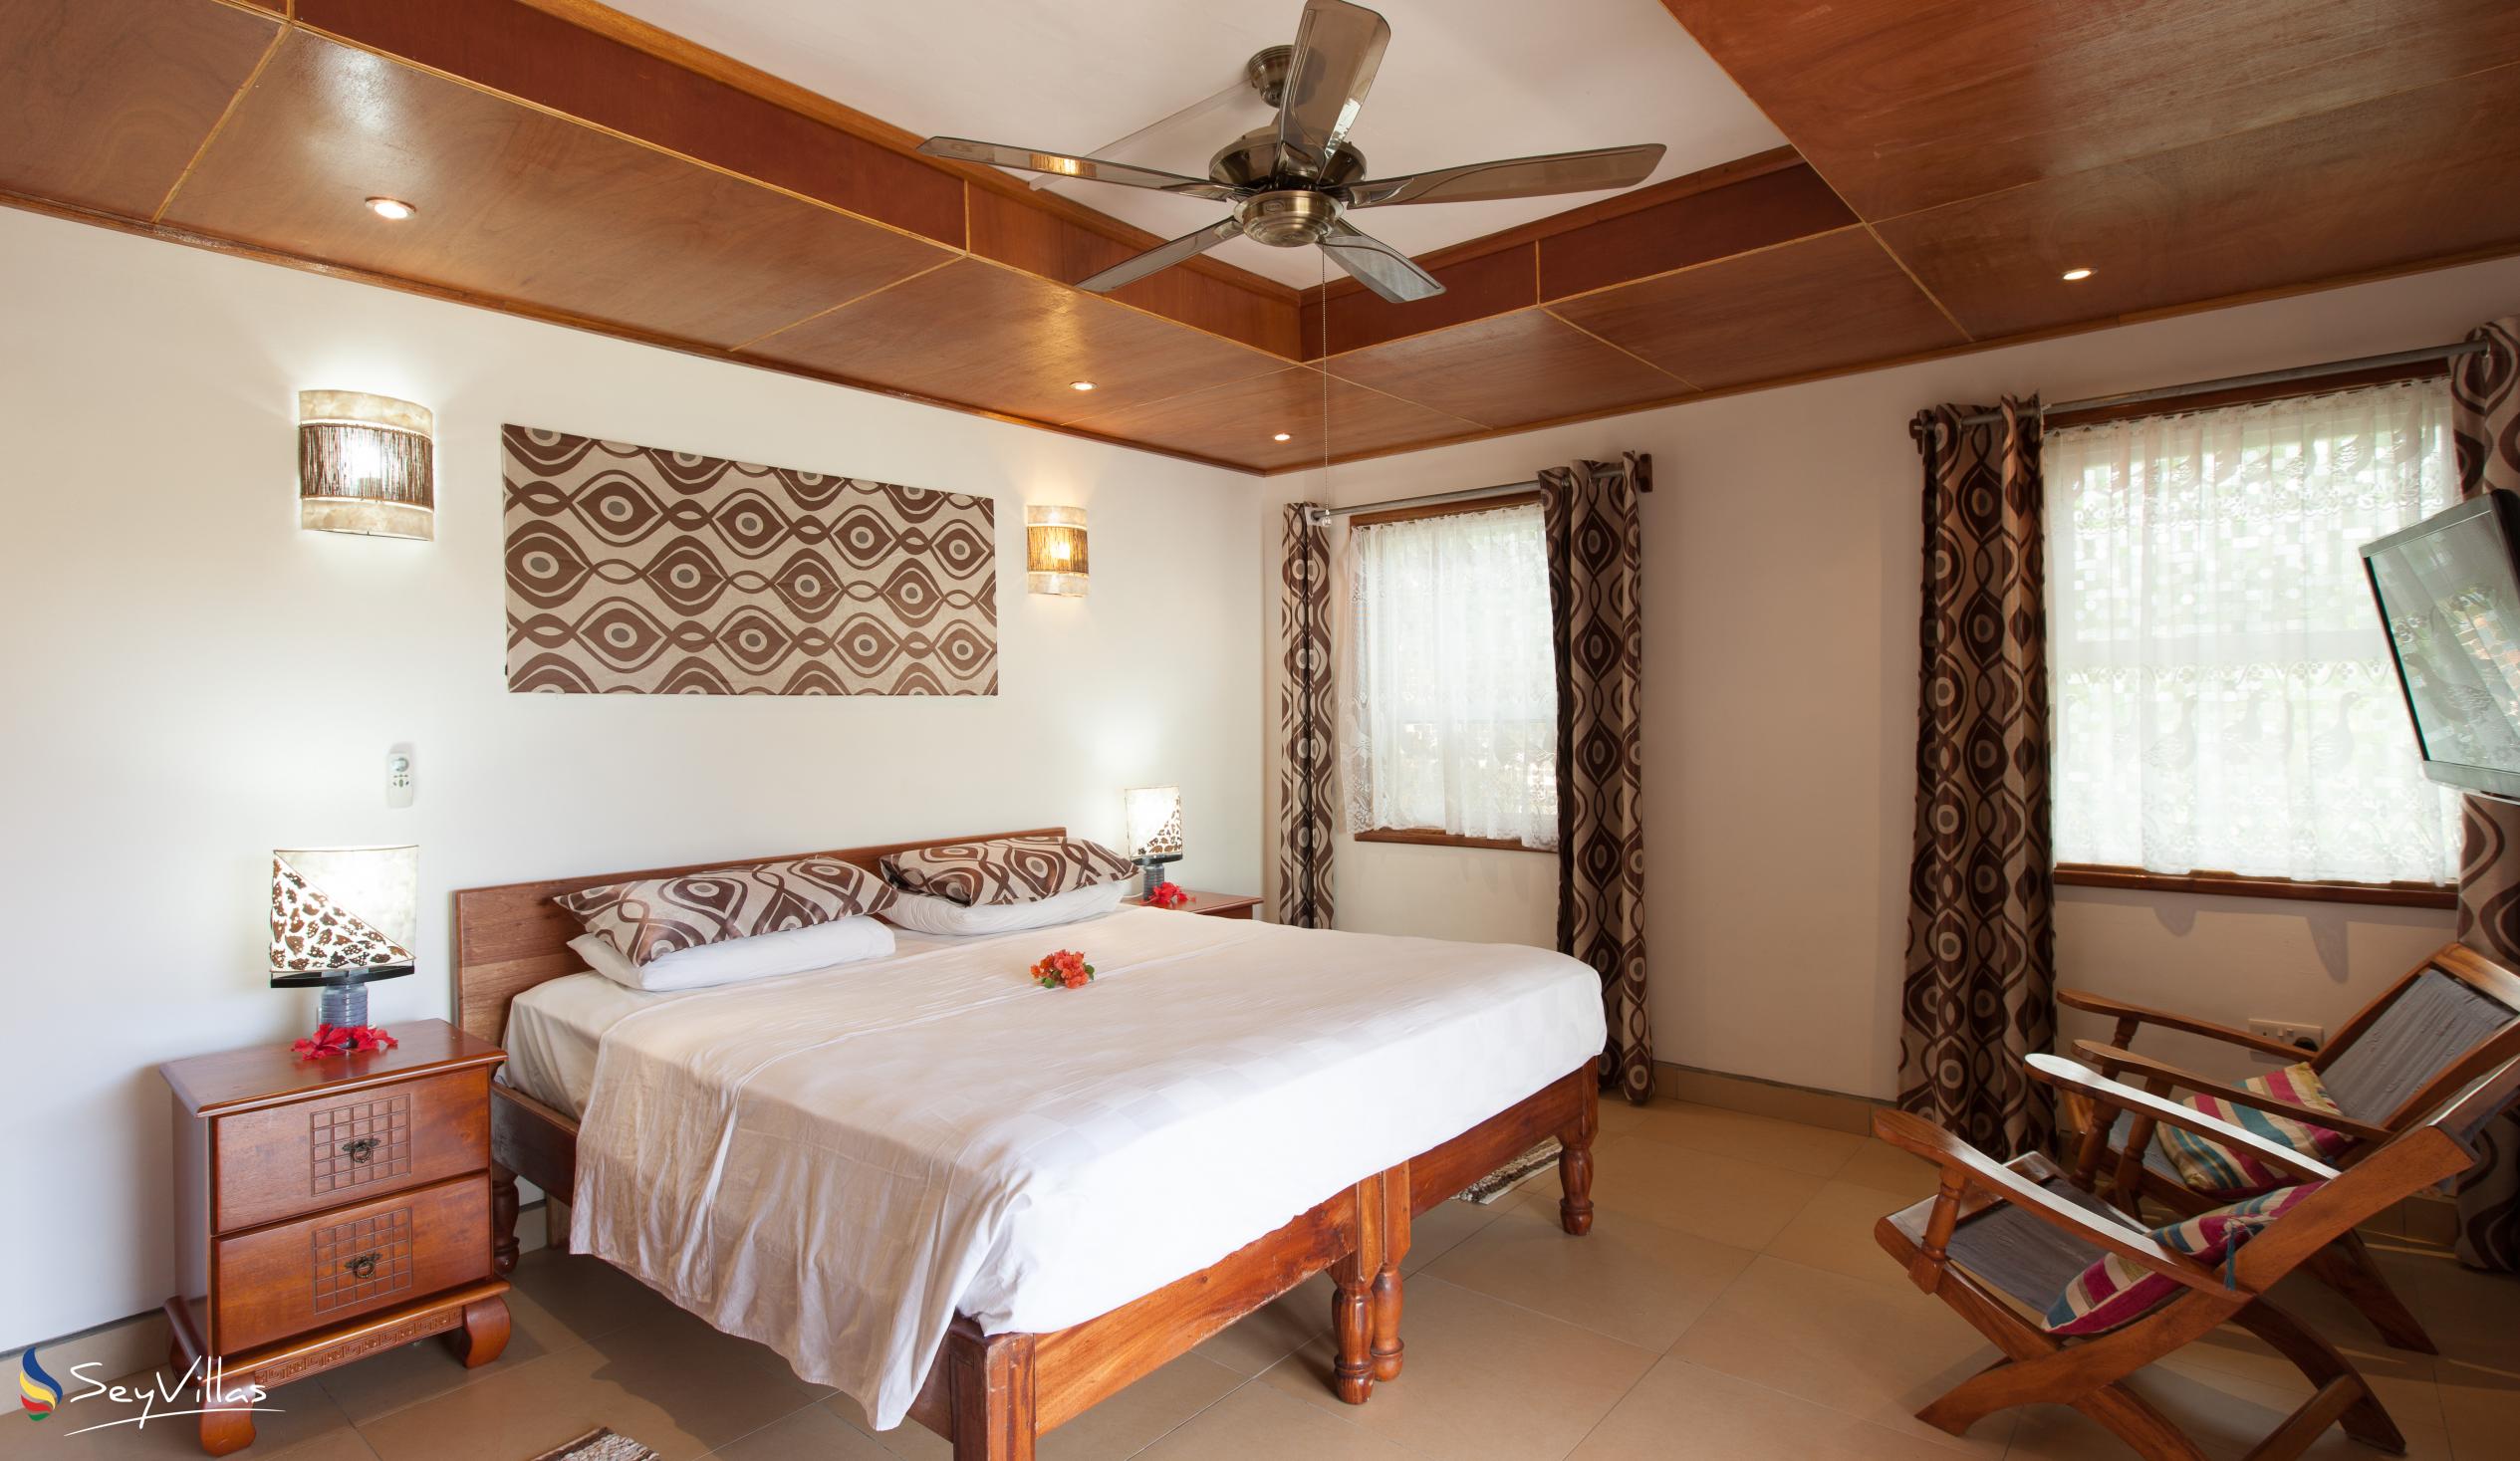 Photo 101: Sea View Lodge - Small Stilt-Villa - Praslin (Seychelles)